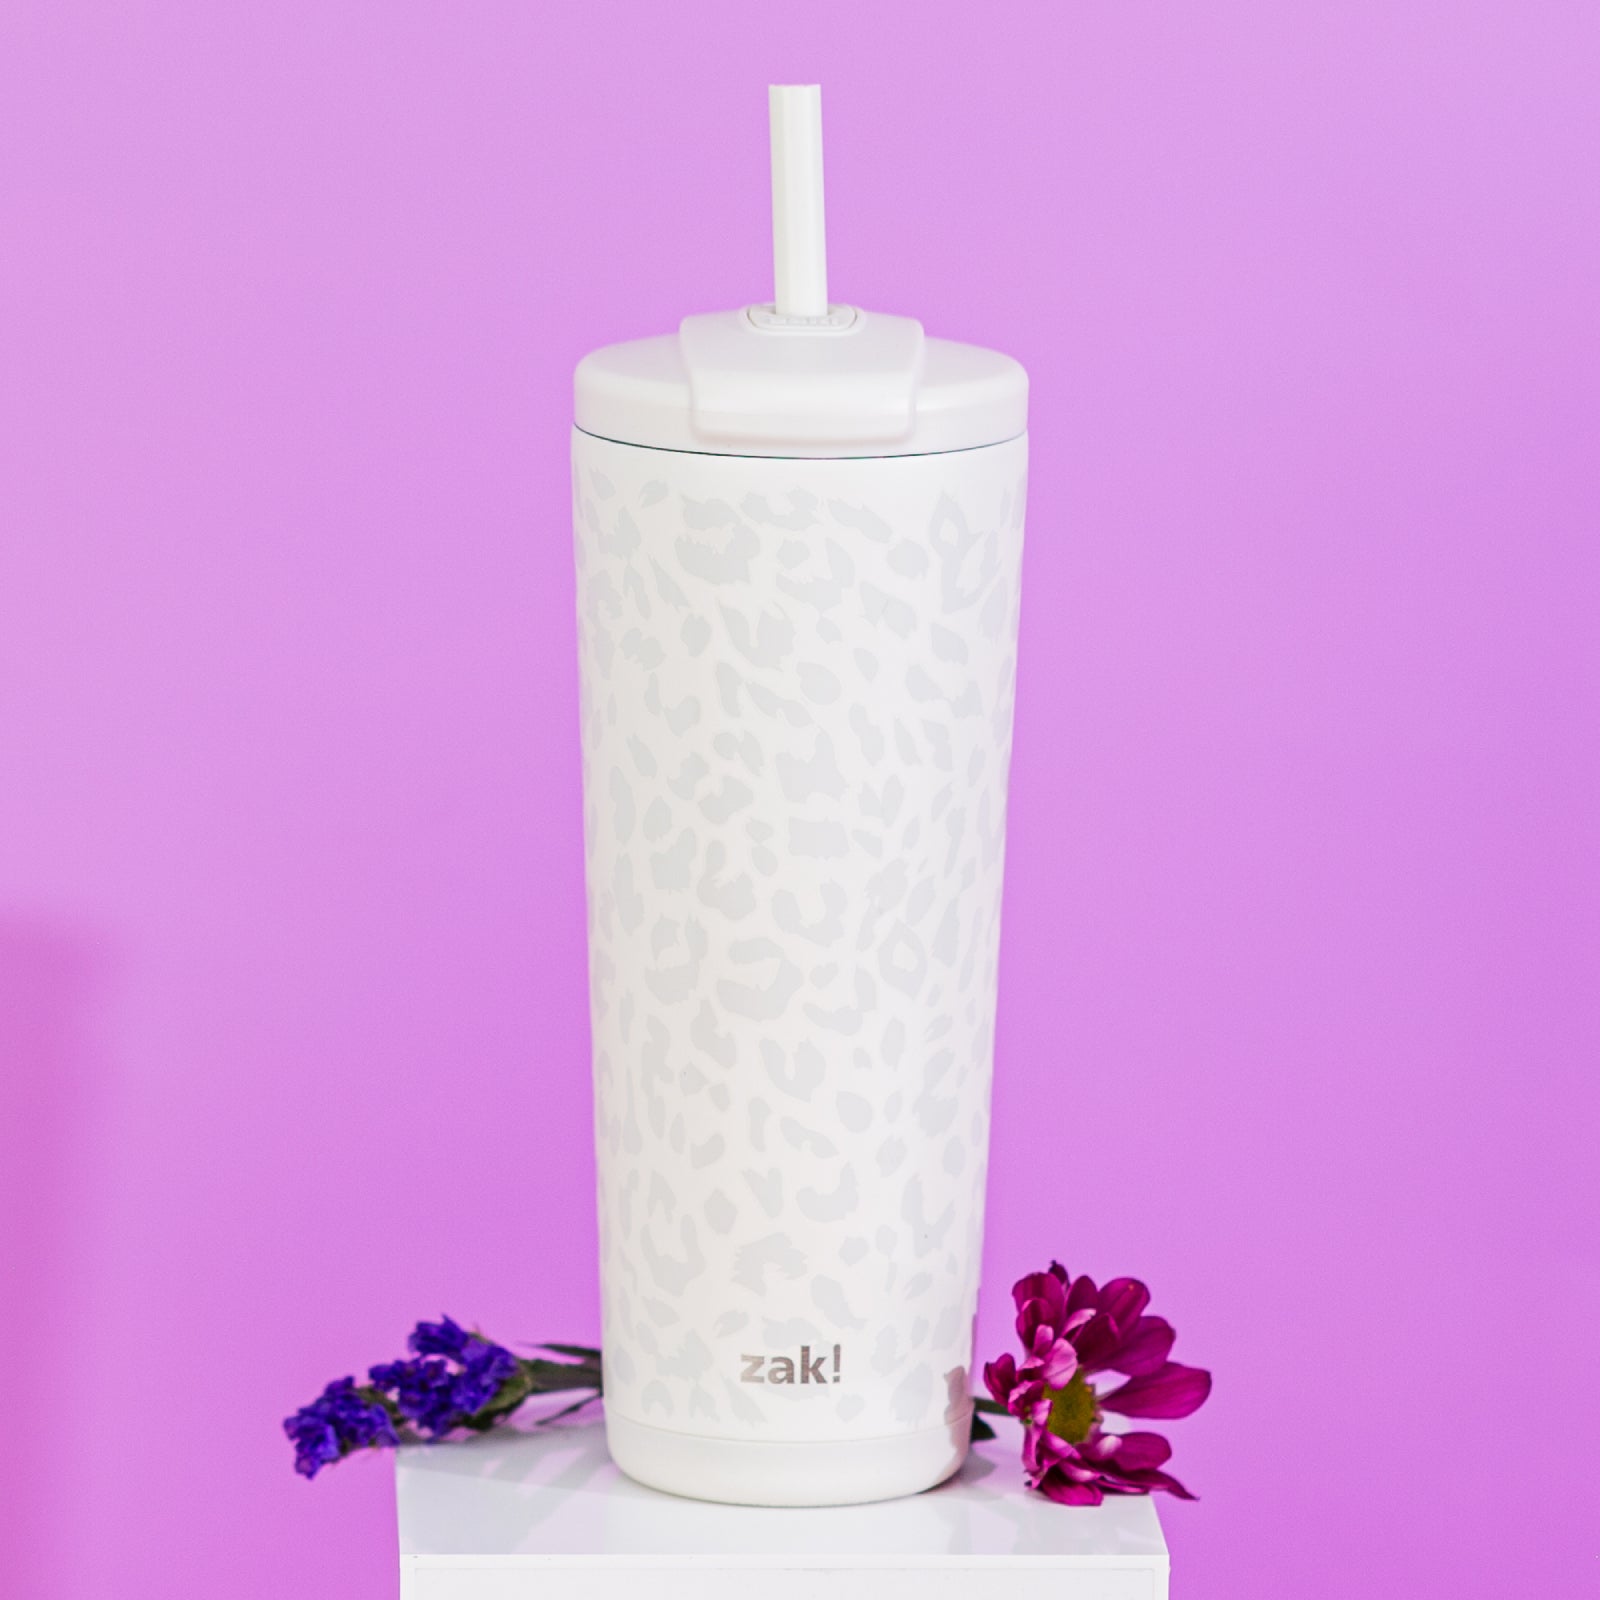 Beacon Insulated Cold Beverage Straw Tumbler - Cream Leopard, 24 ounces